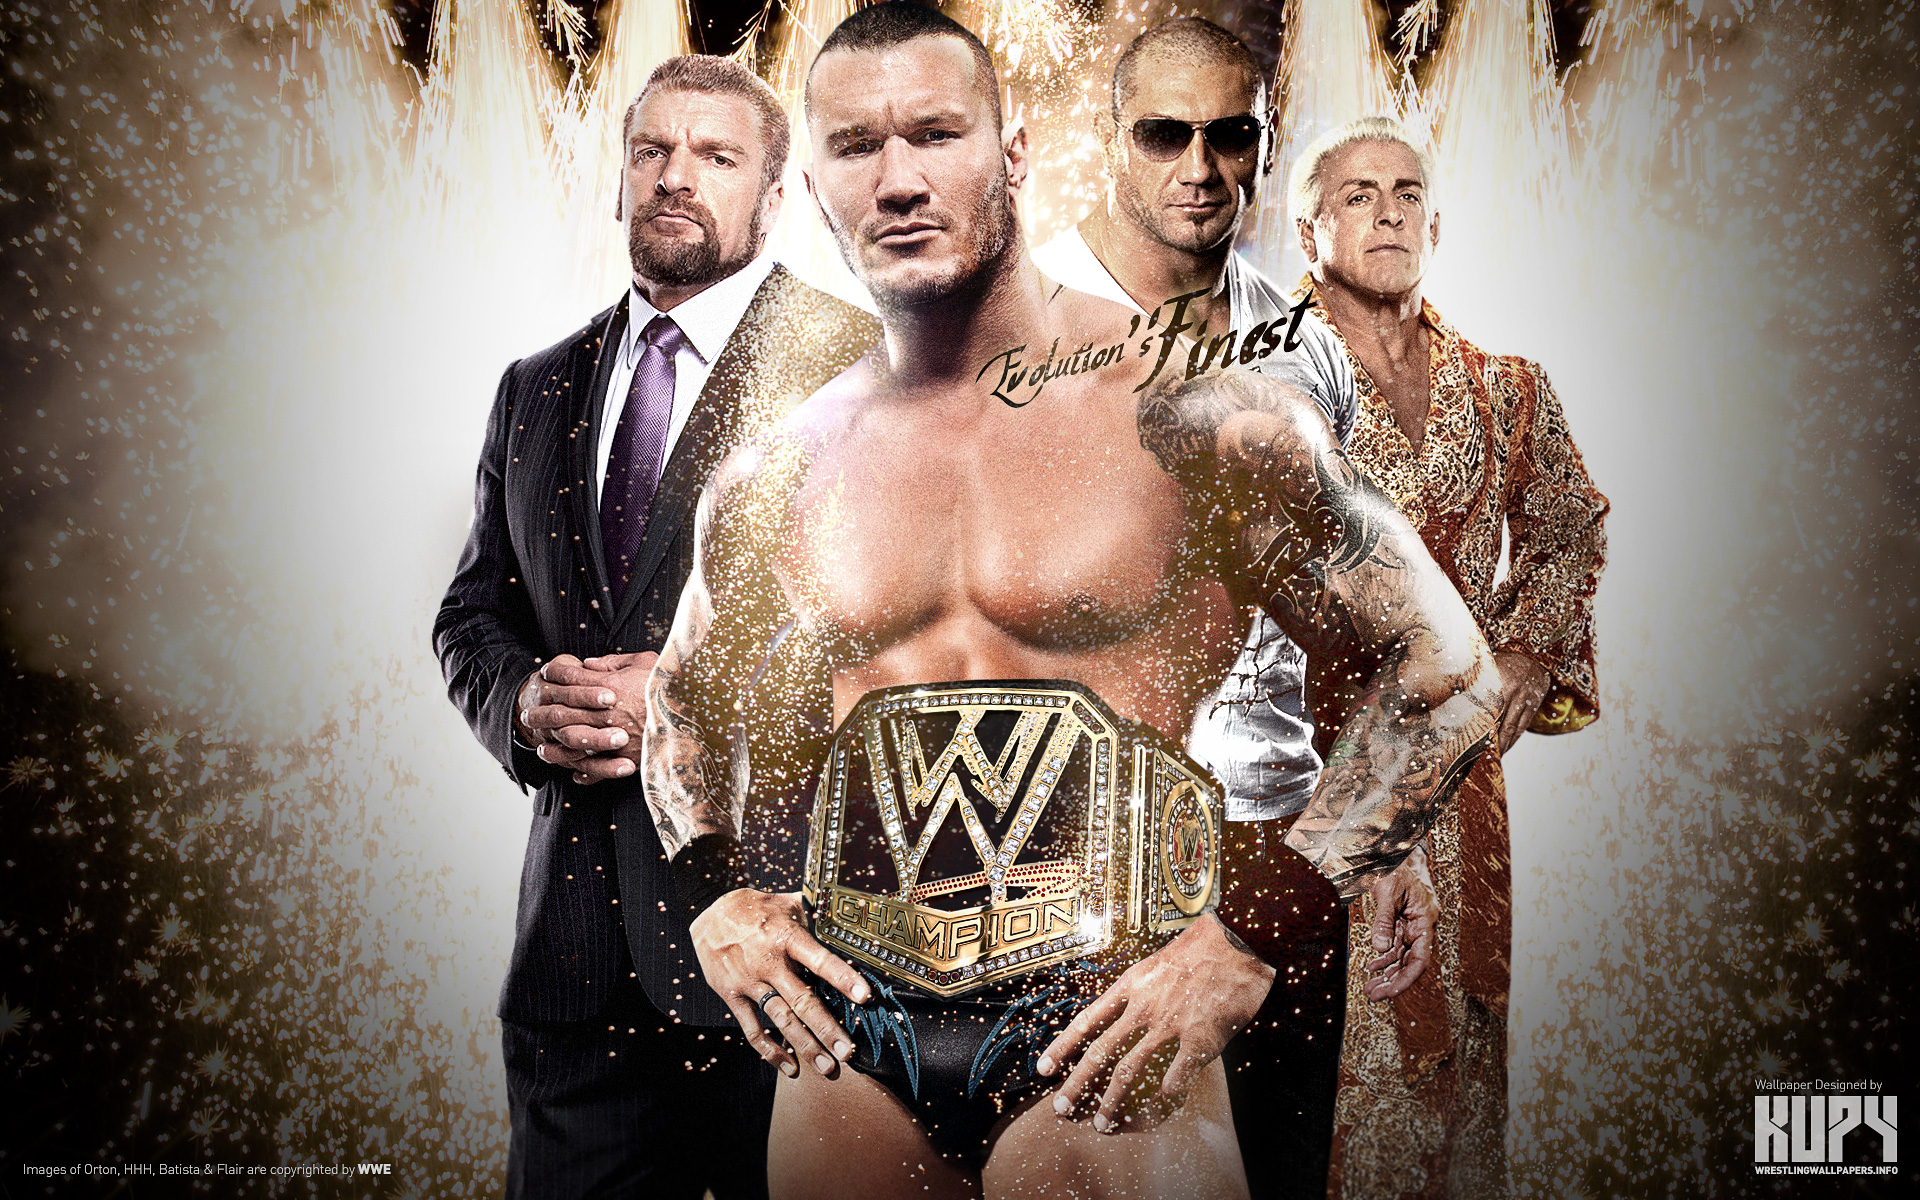 NEW Randy Orton WWE Champion wallpaper - Kupy Wrestling Wallpapers